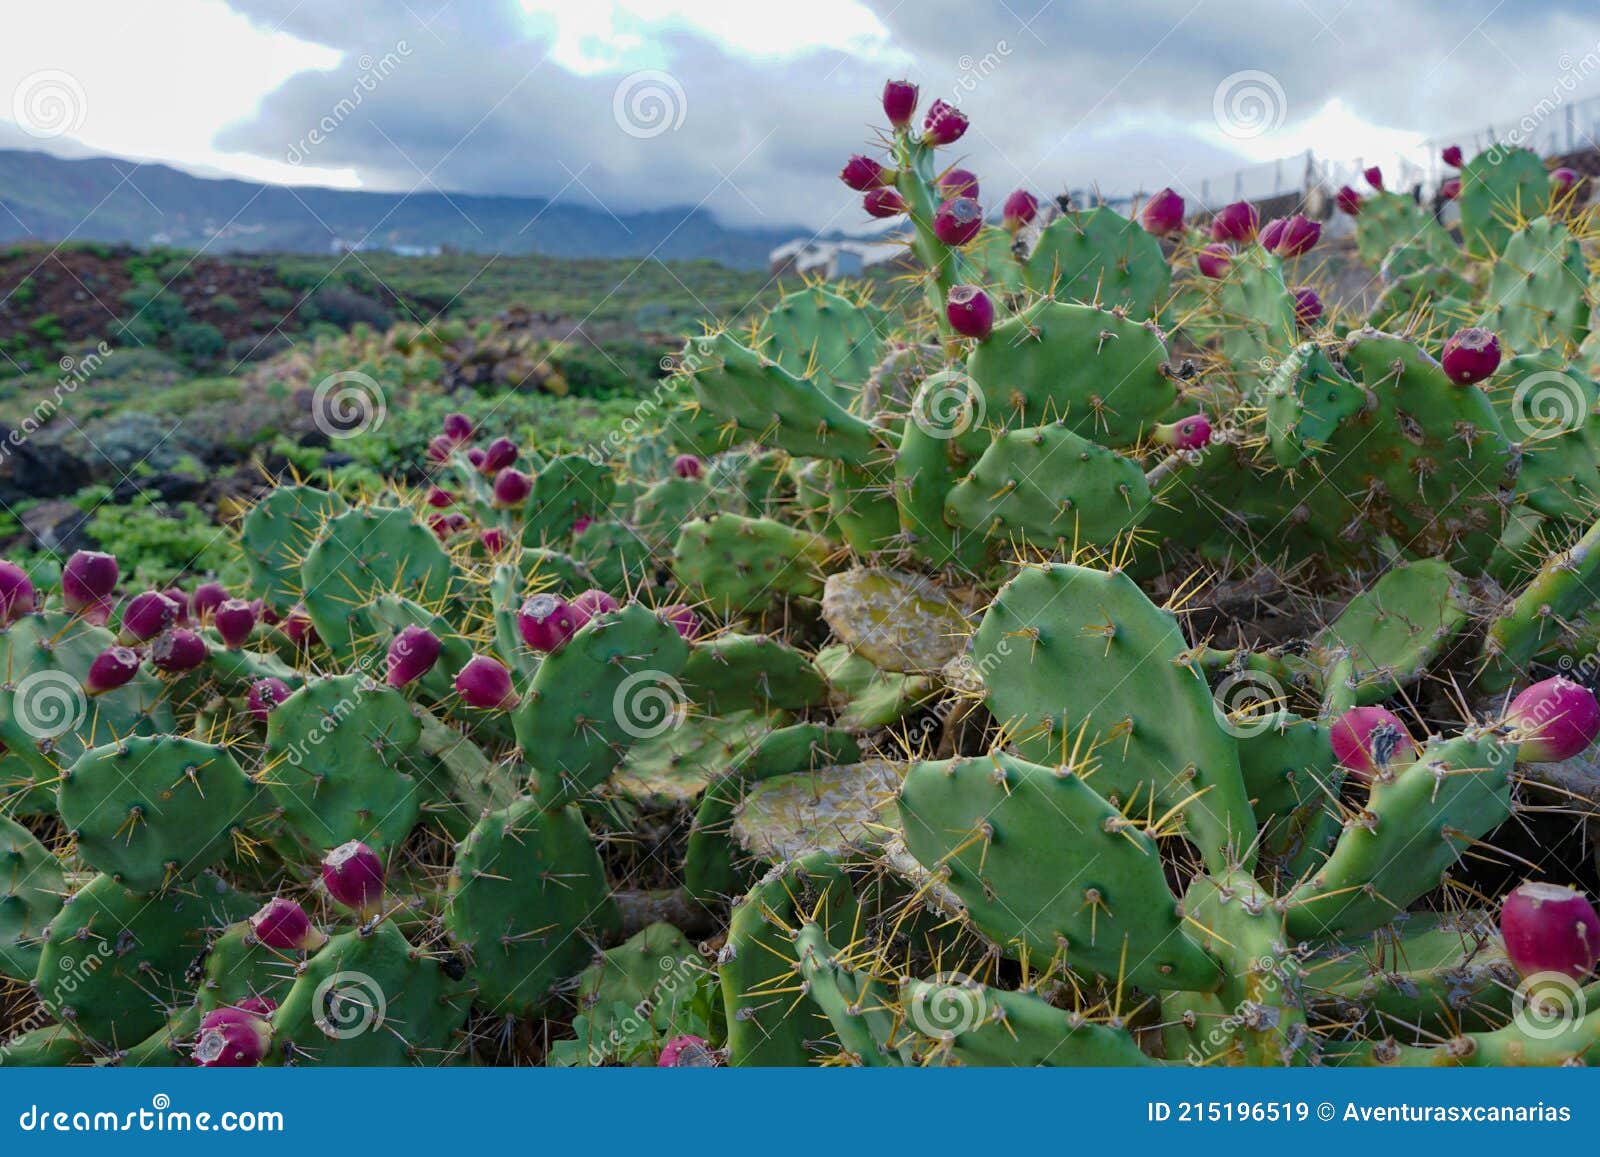 tunera de tuno indio, a very typical cactus of the canary islands